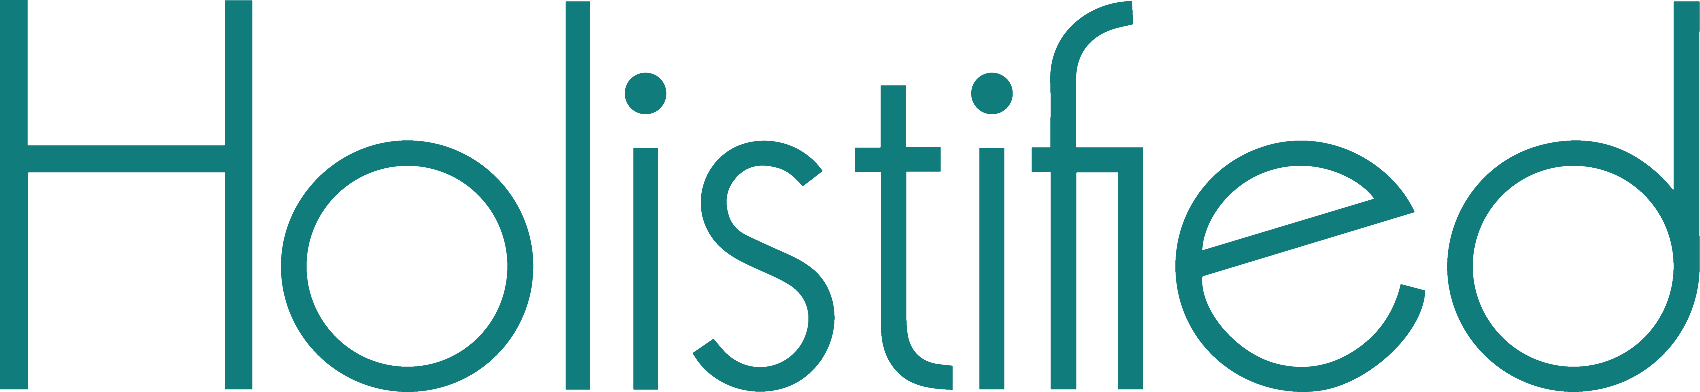 Holistified-Primary-LogoBrand